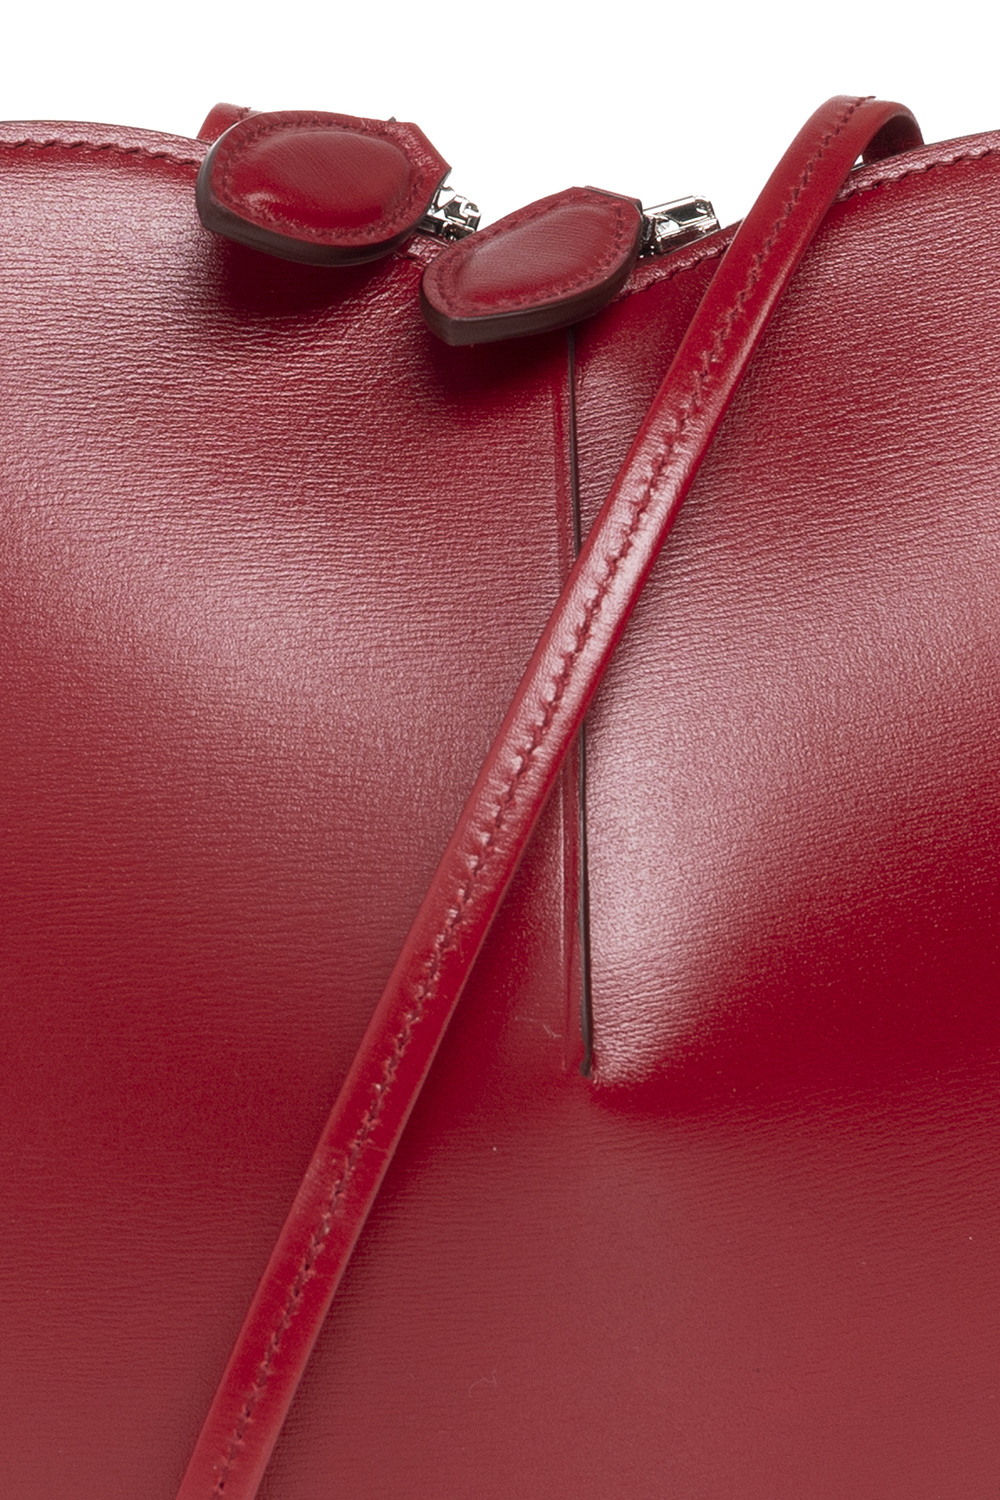 Paul Smith Leather & Travel - Handbags